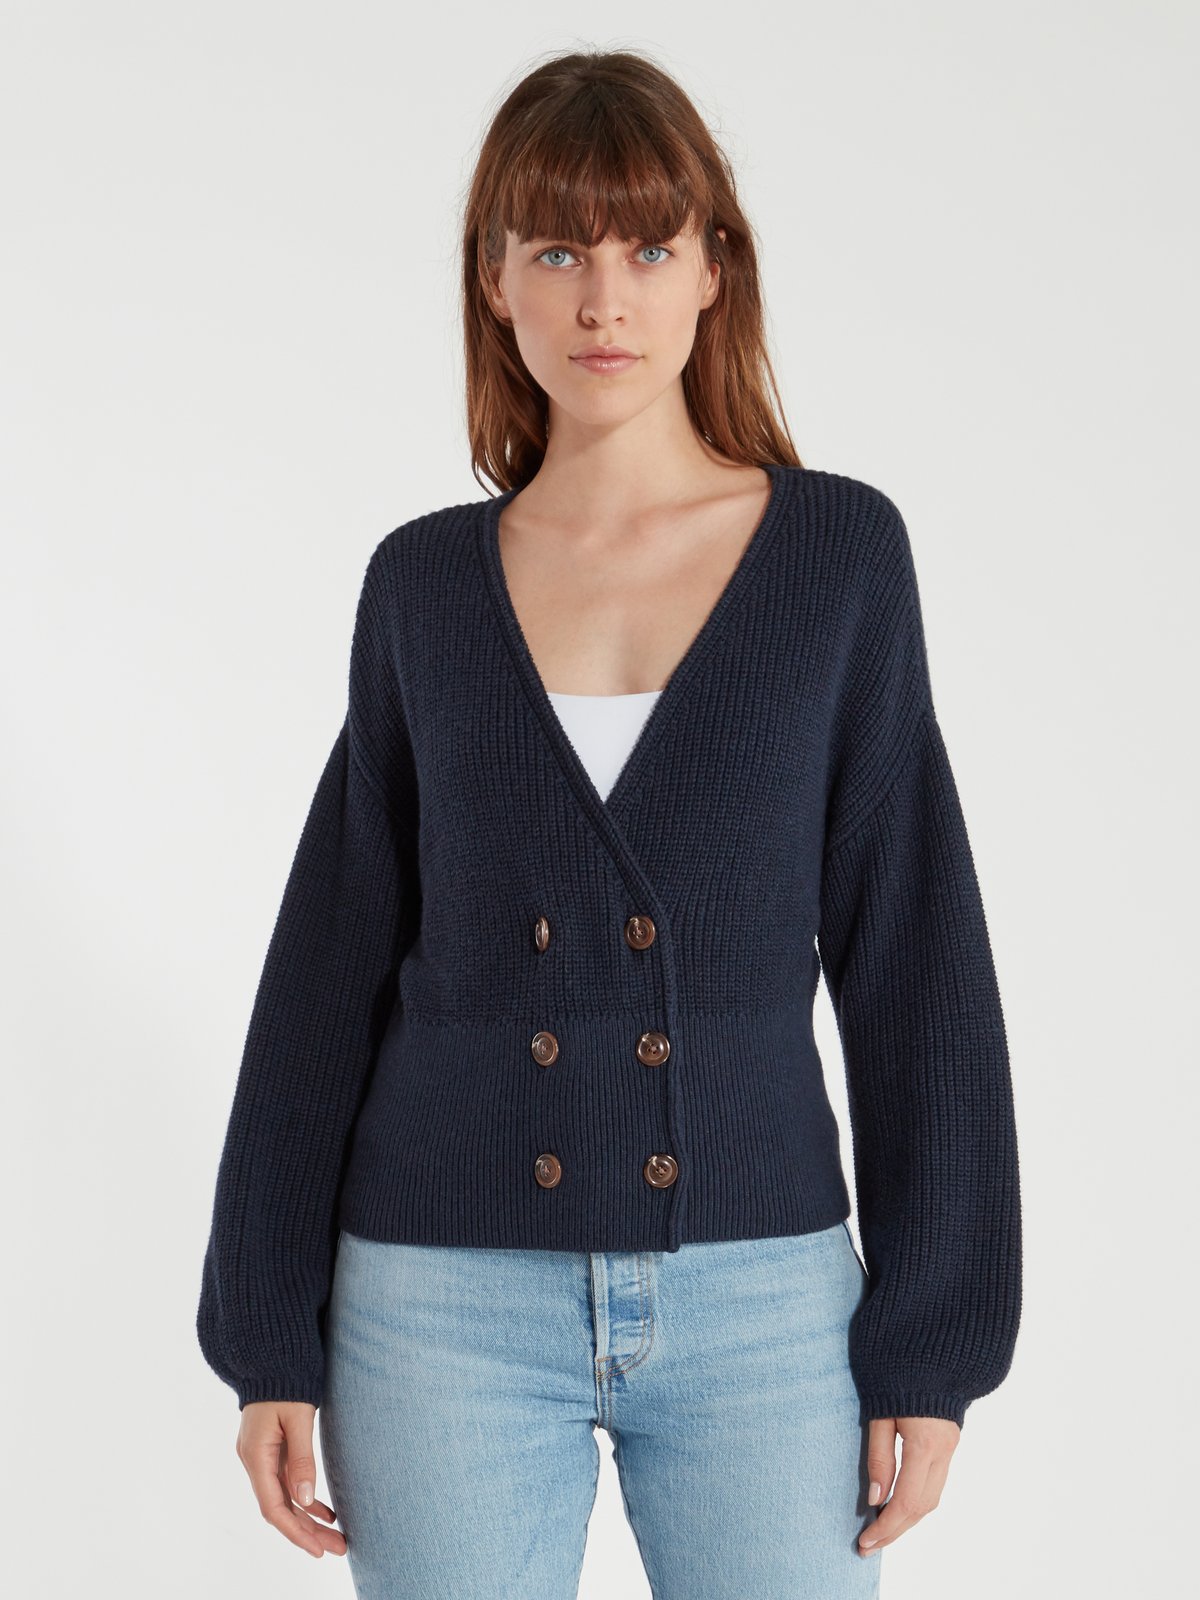 Billie the Label Madeleine Double Breasted Sweater | Verishop